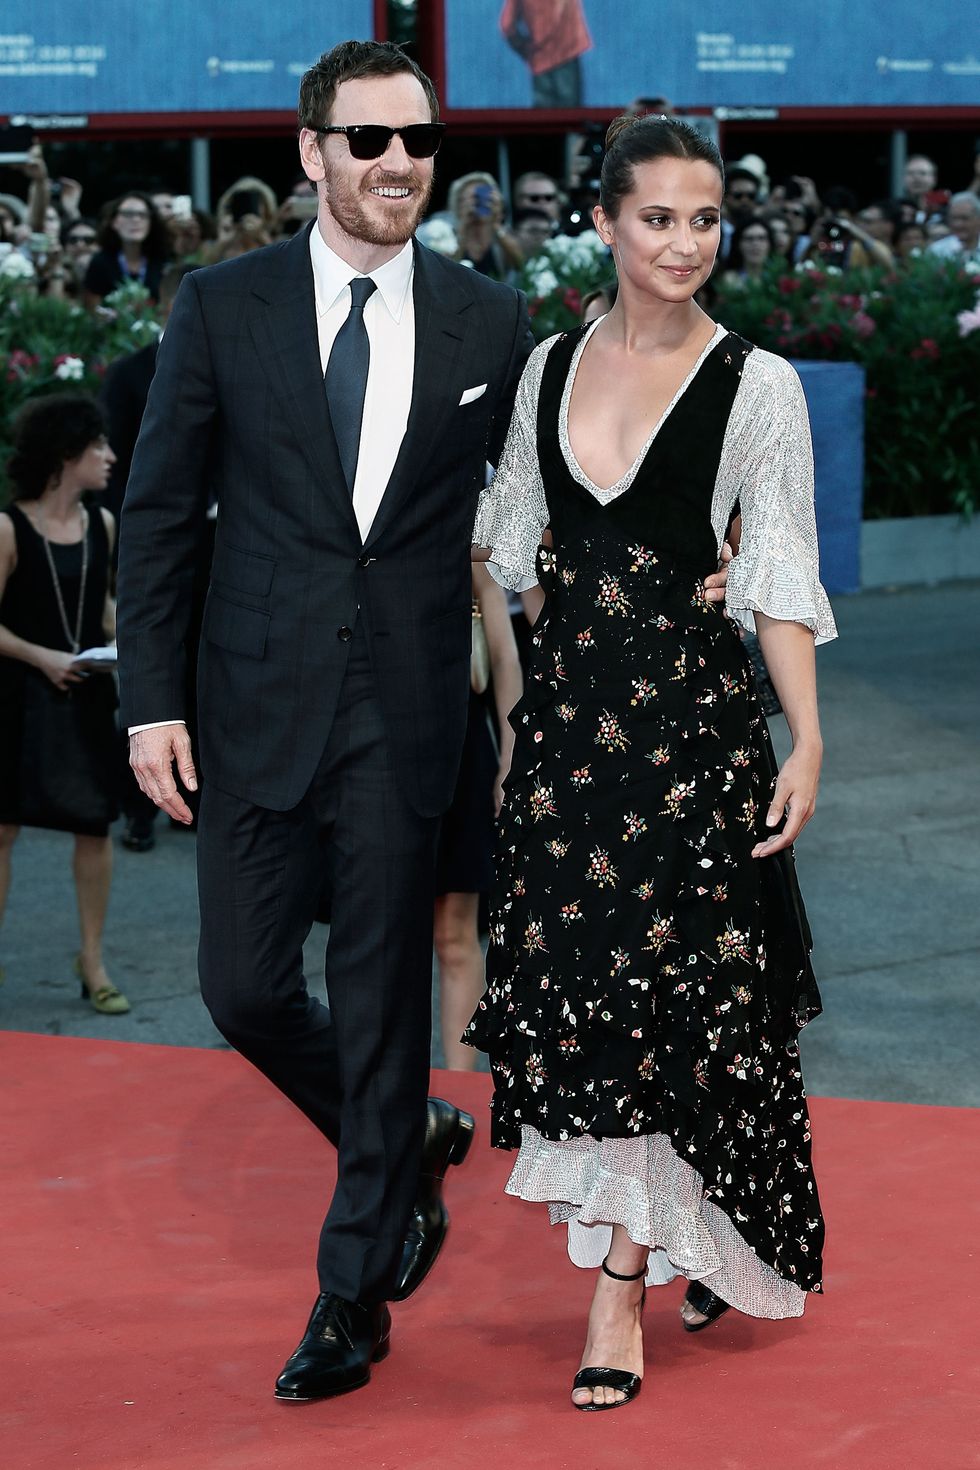 Michael Fassbender and Alicia Vikander at the Venice Film Festival 2016